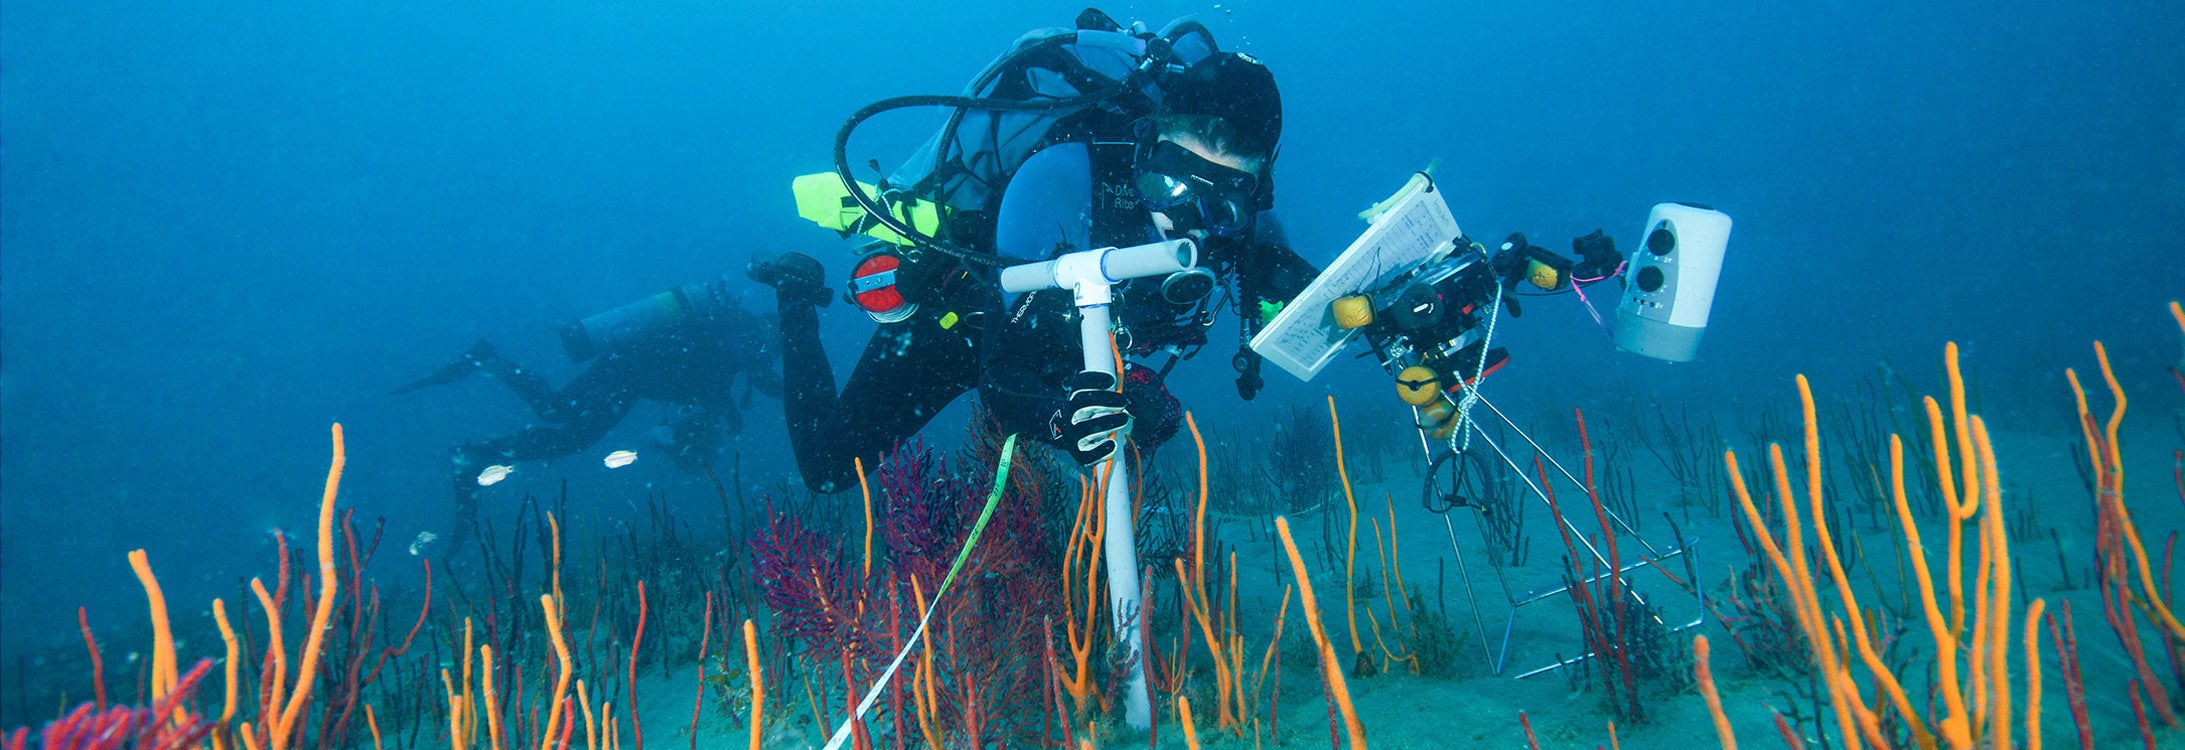 Scuba diver measuring and surveying the ocean floor